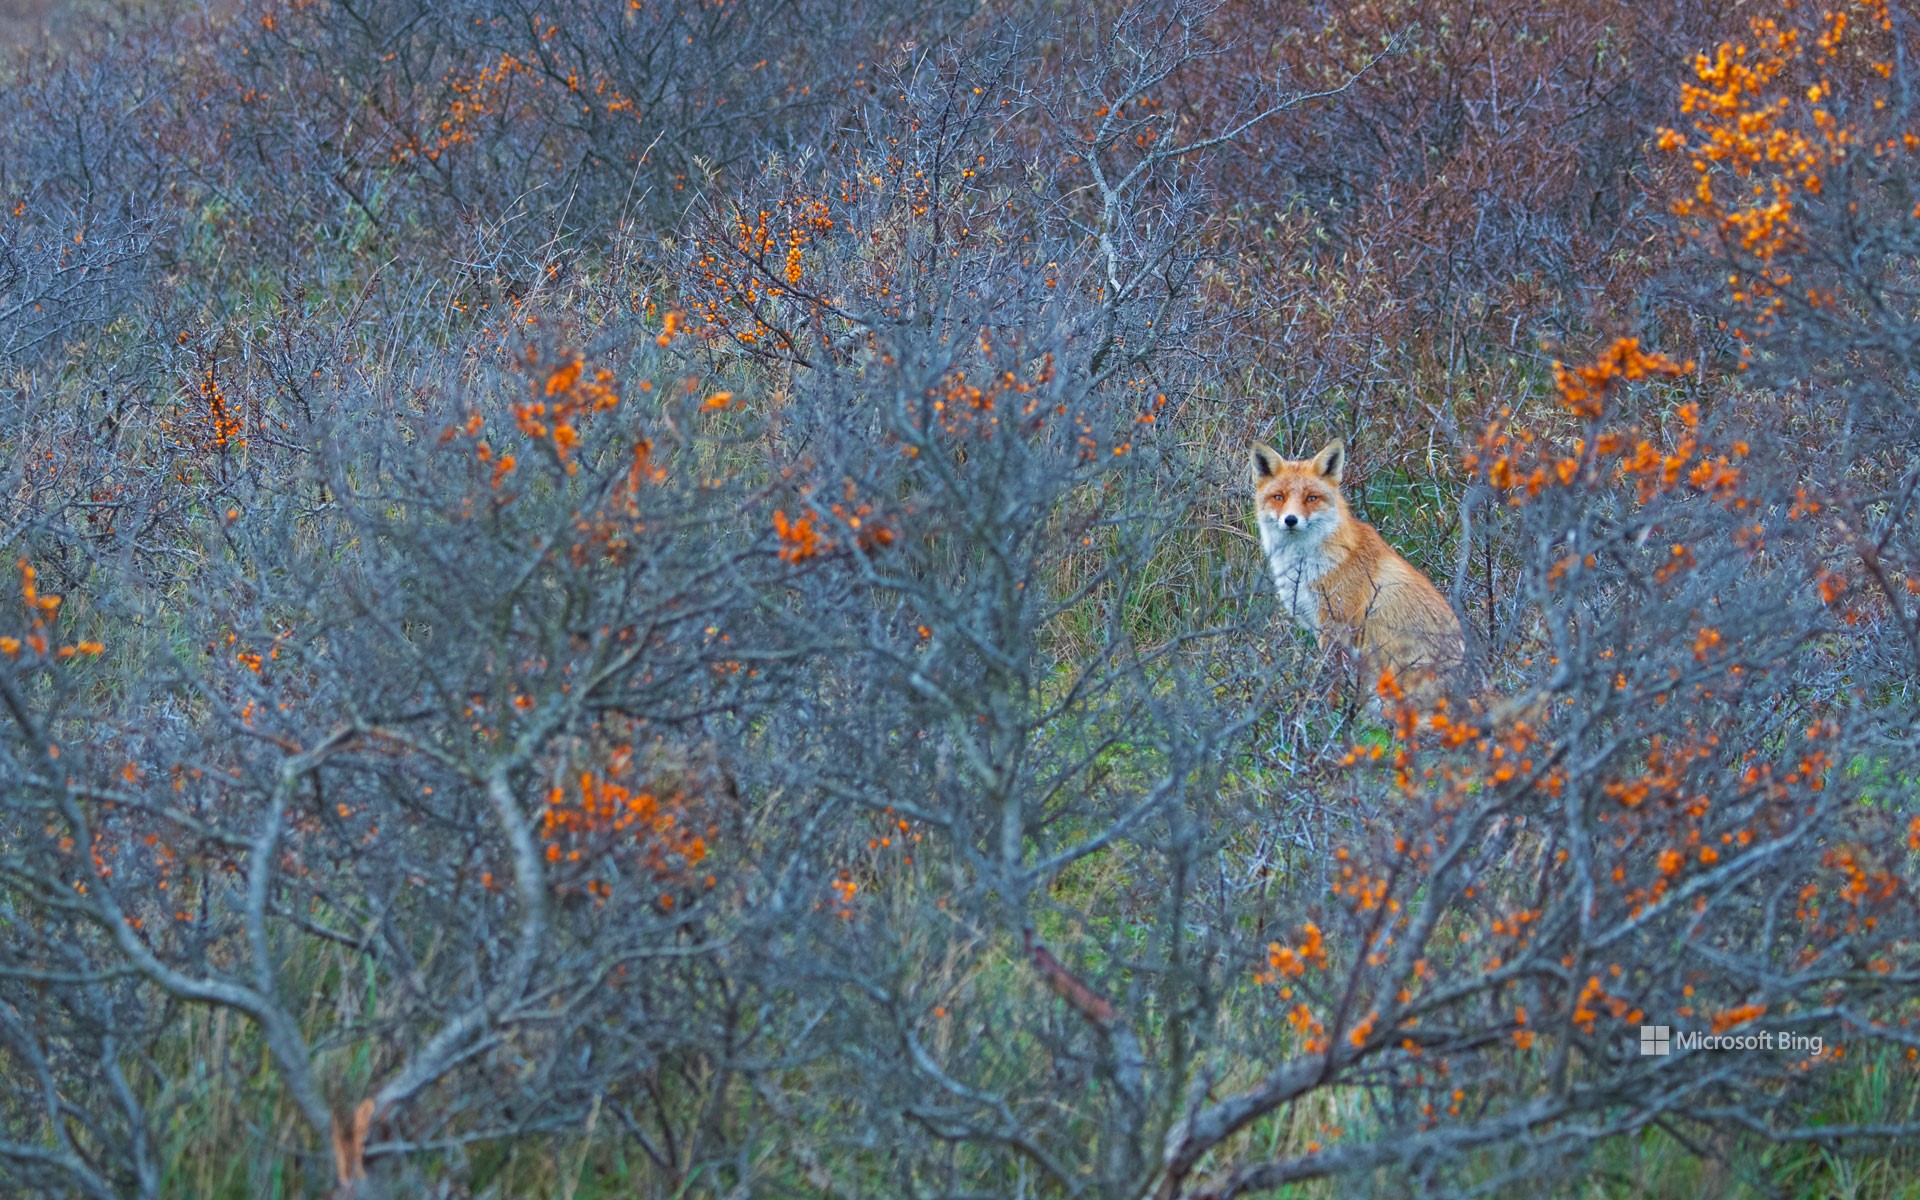 Red fox in Amsterdamse Waterleidingduinen Nature Reserve in the Netherlands